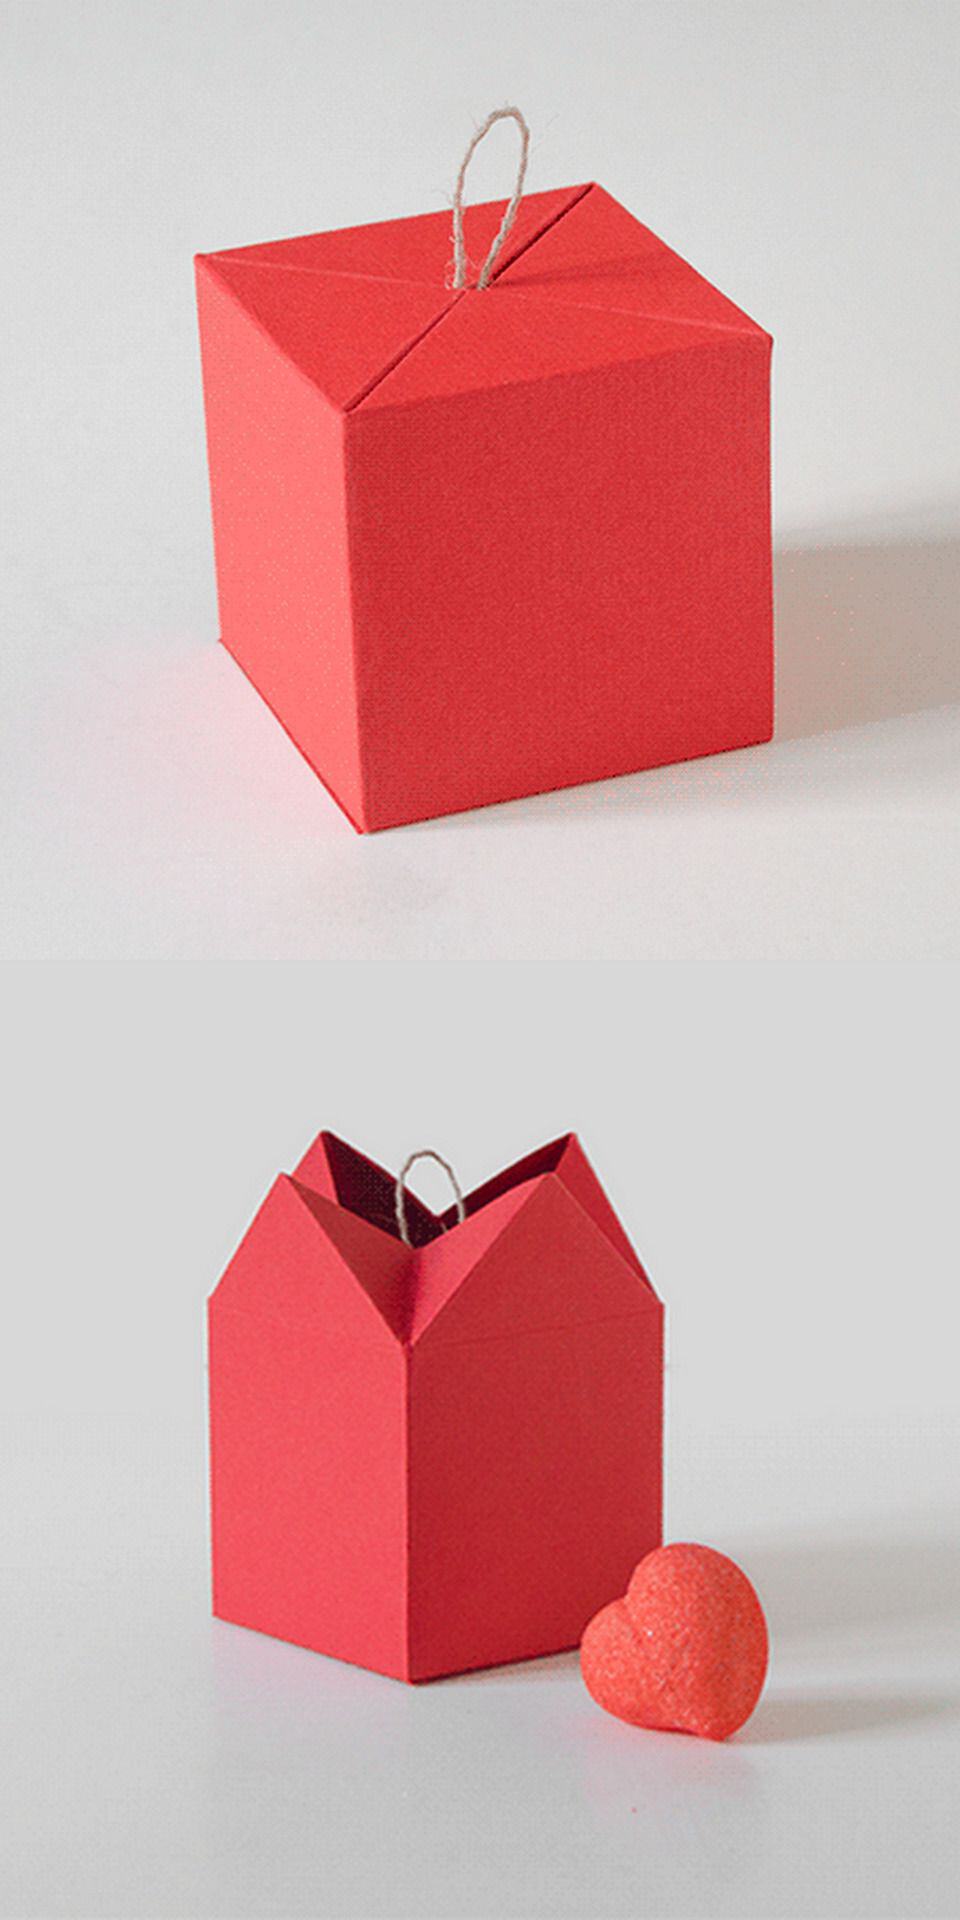 Unfolding cube box